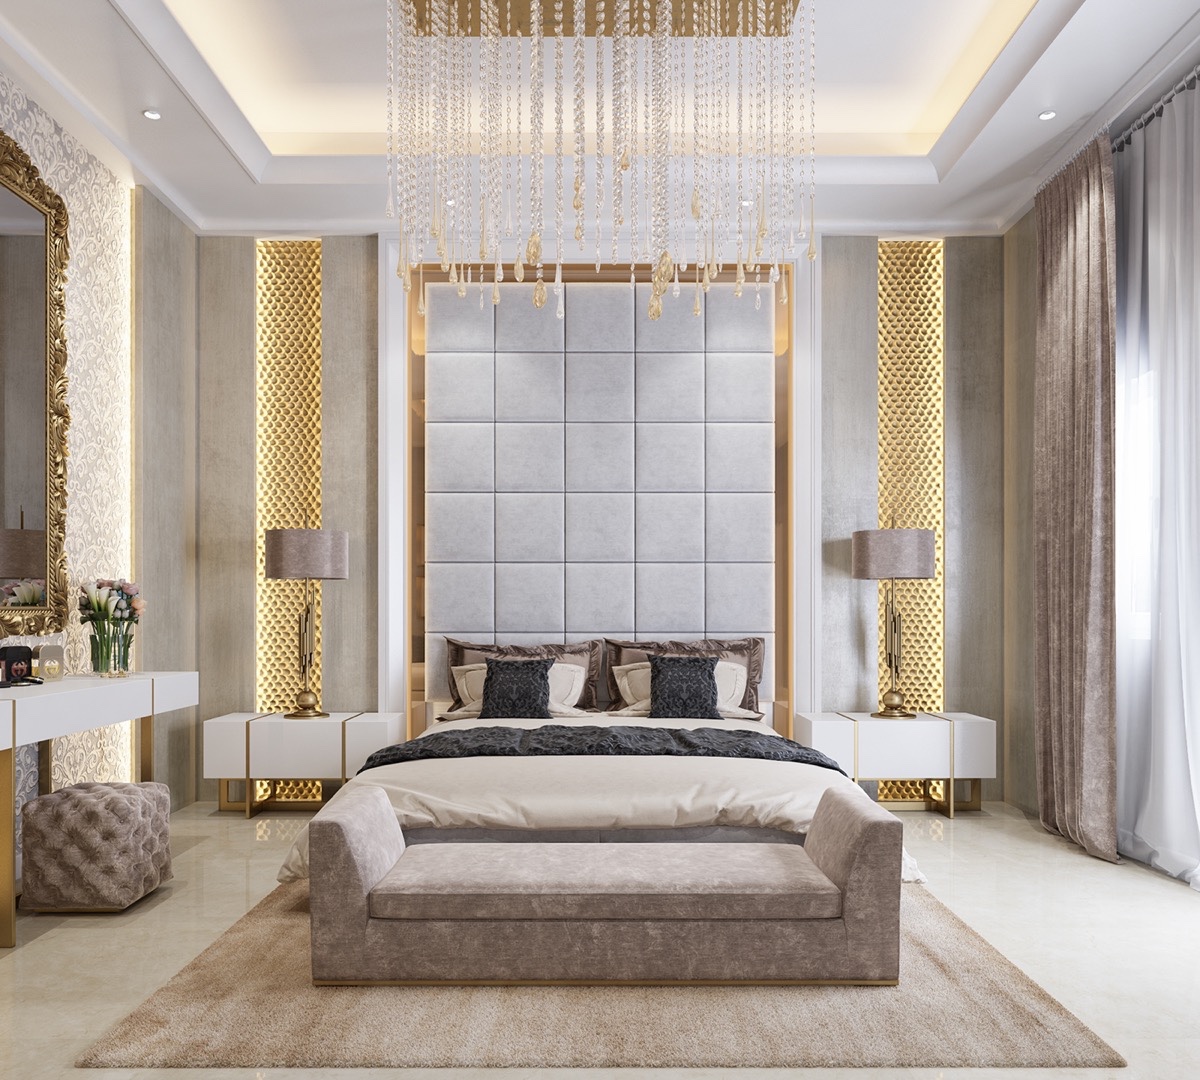 3 Kind Of Elegant Bedroom Design Ideas Includes a ...